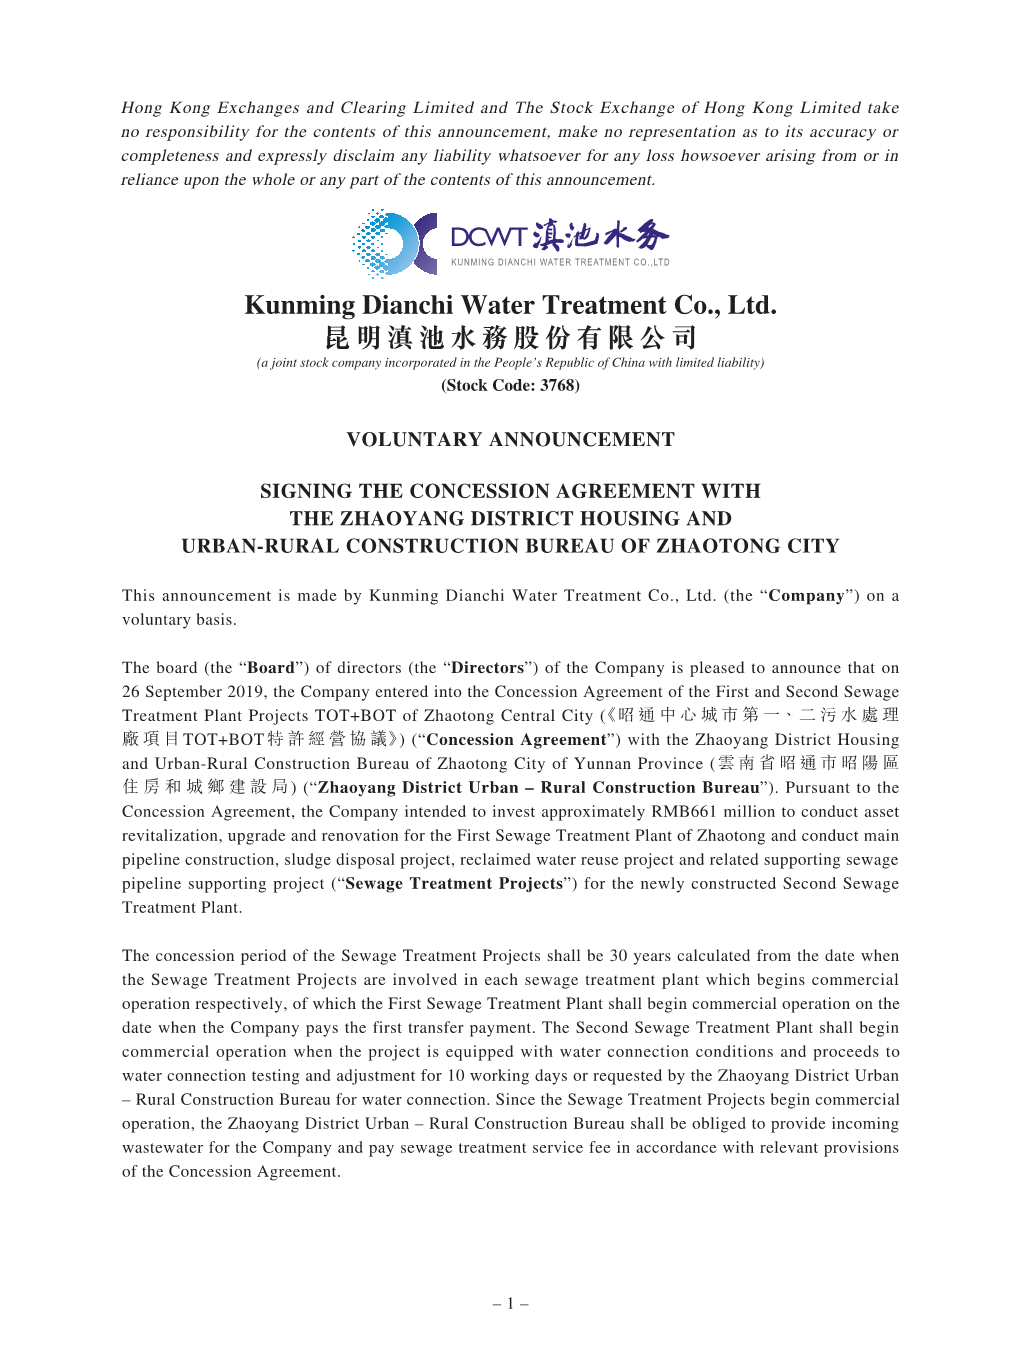 Kunming Dianchi Water Treatment Co., Ltd. 昆明滇池水務股份有限公司